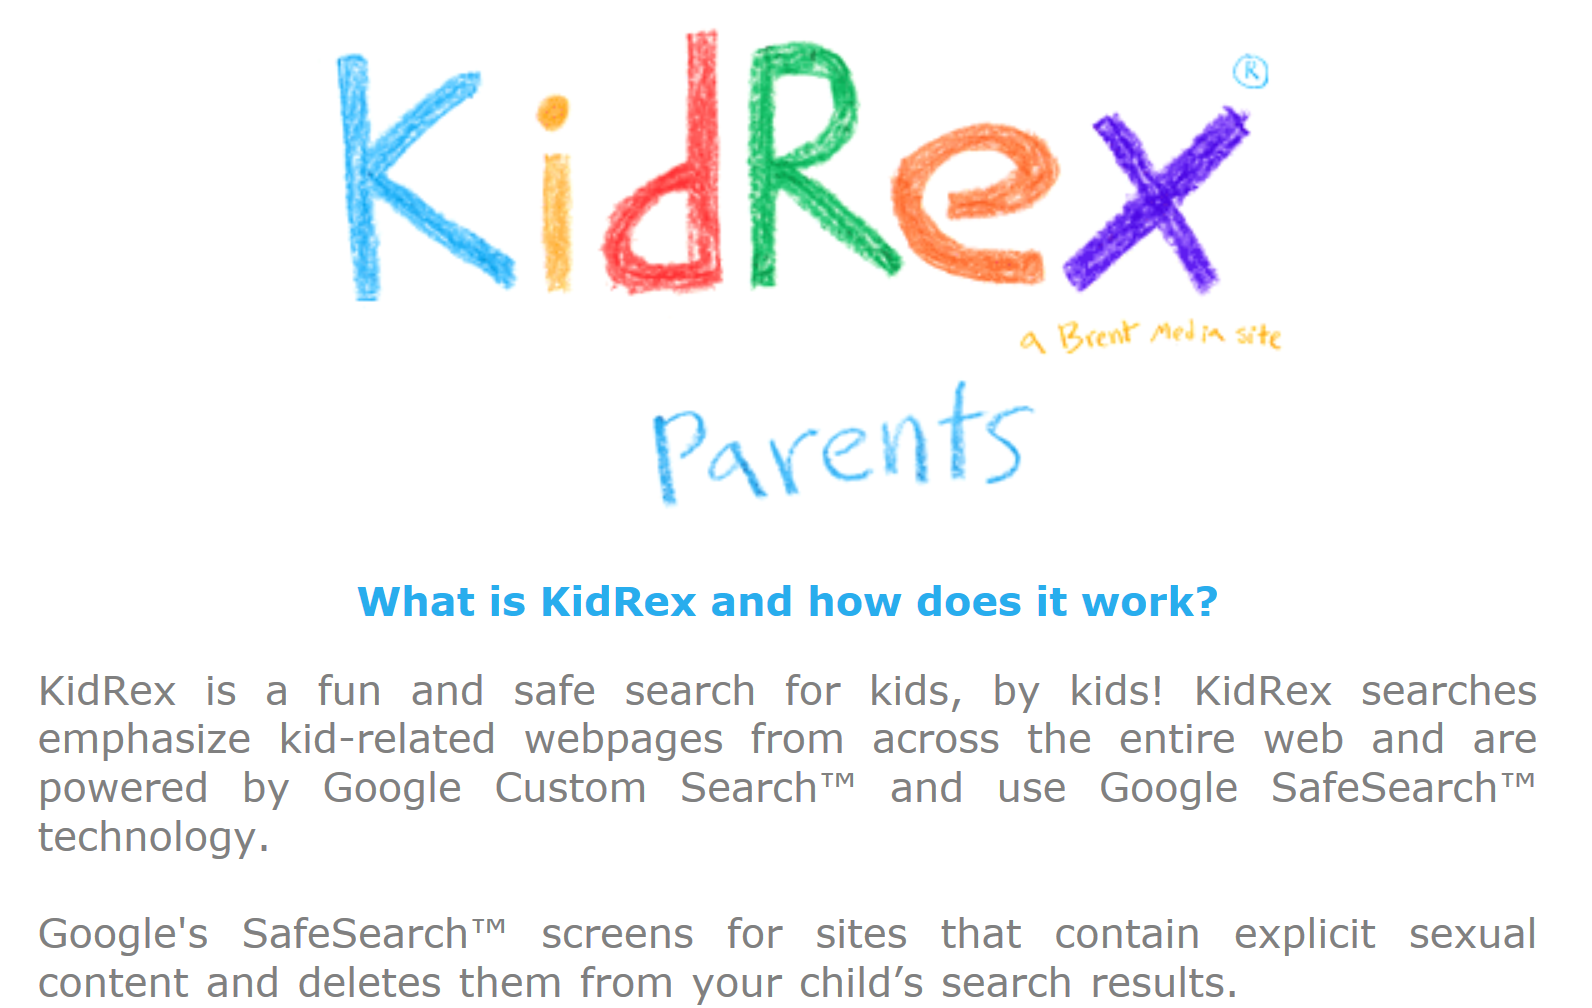 About KidRex